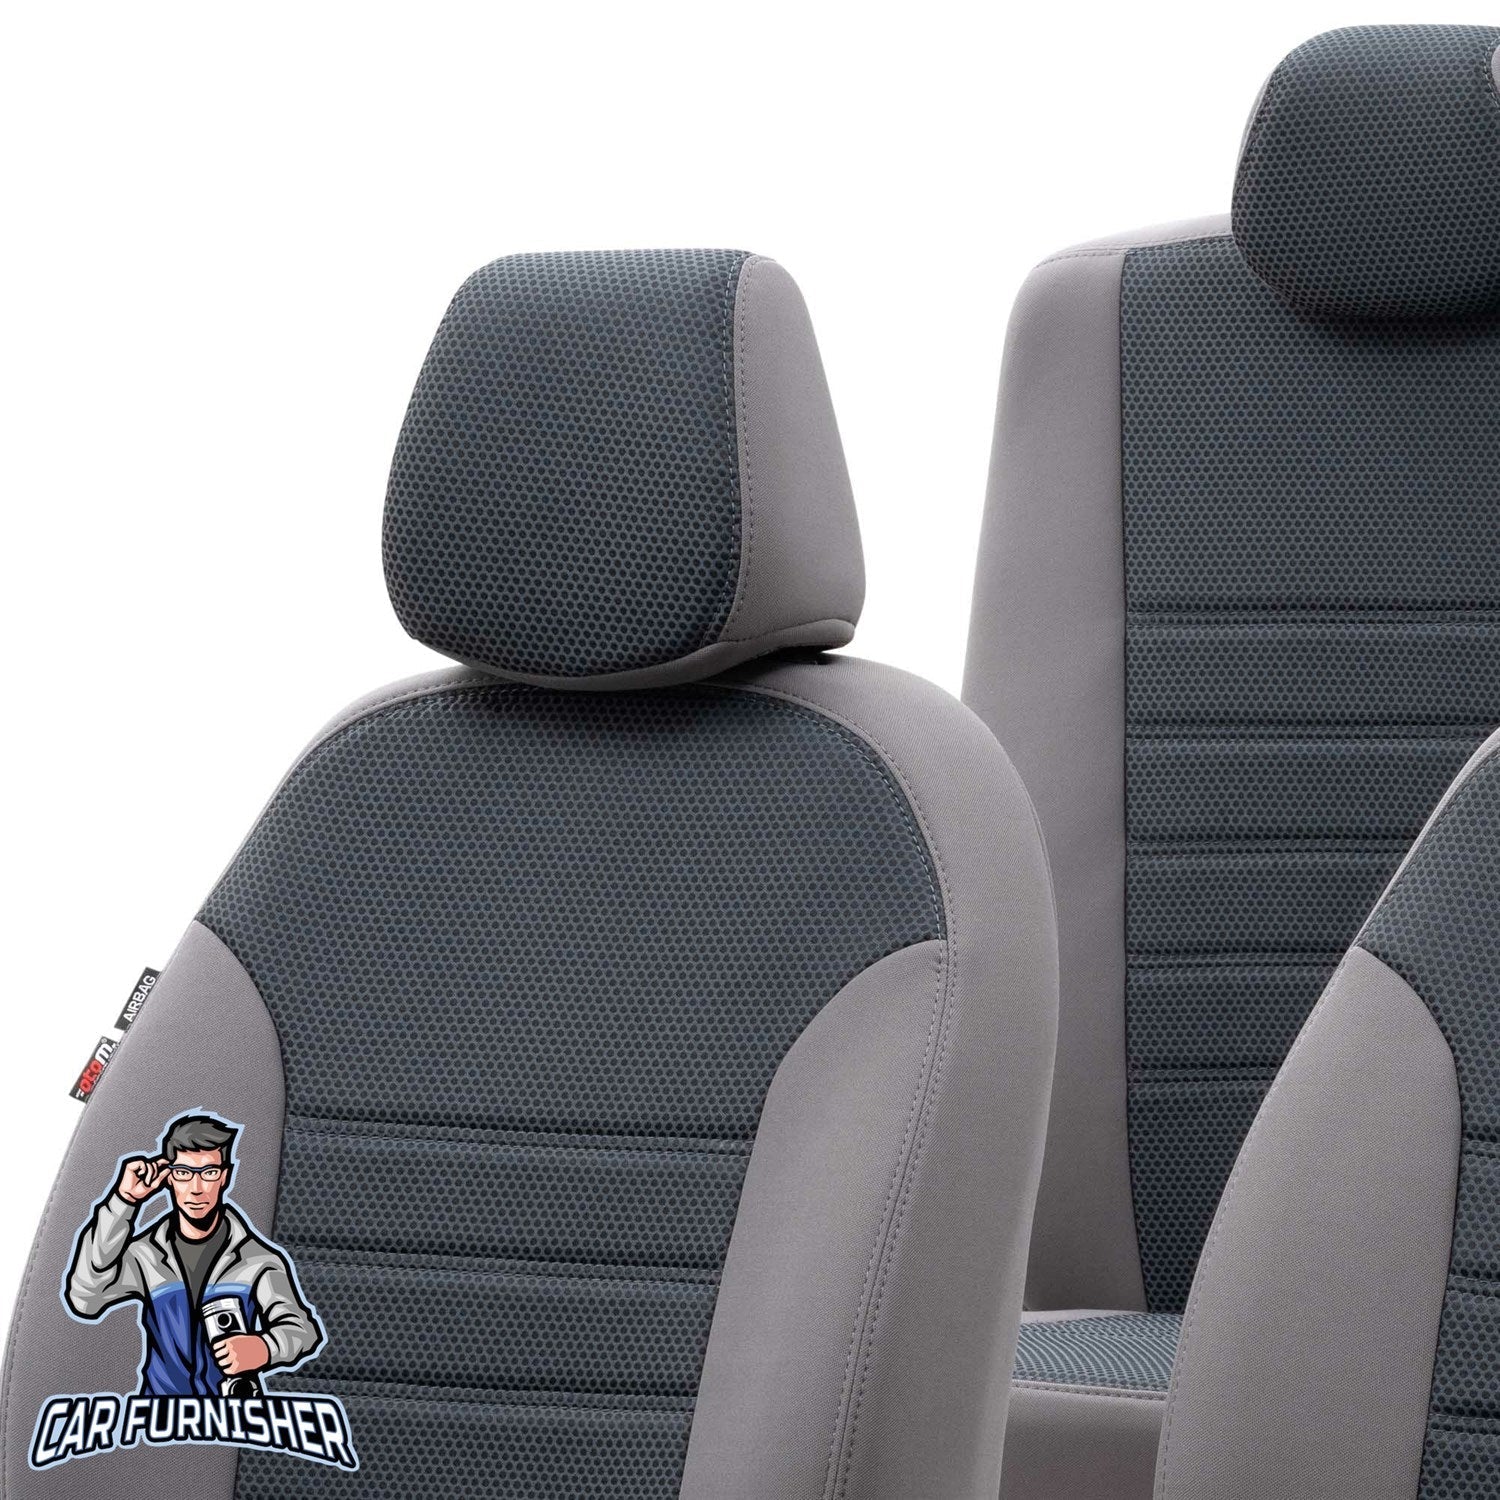 Fiat Tipo Seat Covers Original Jacquard Design Smoked Jacquard Fabric